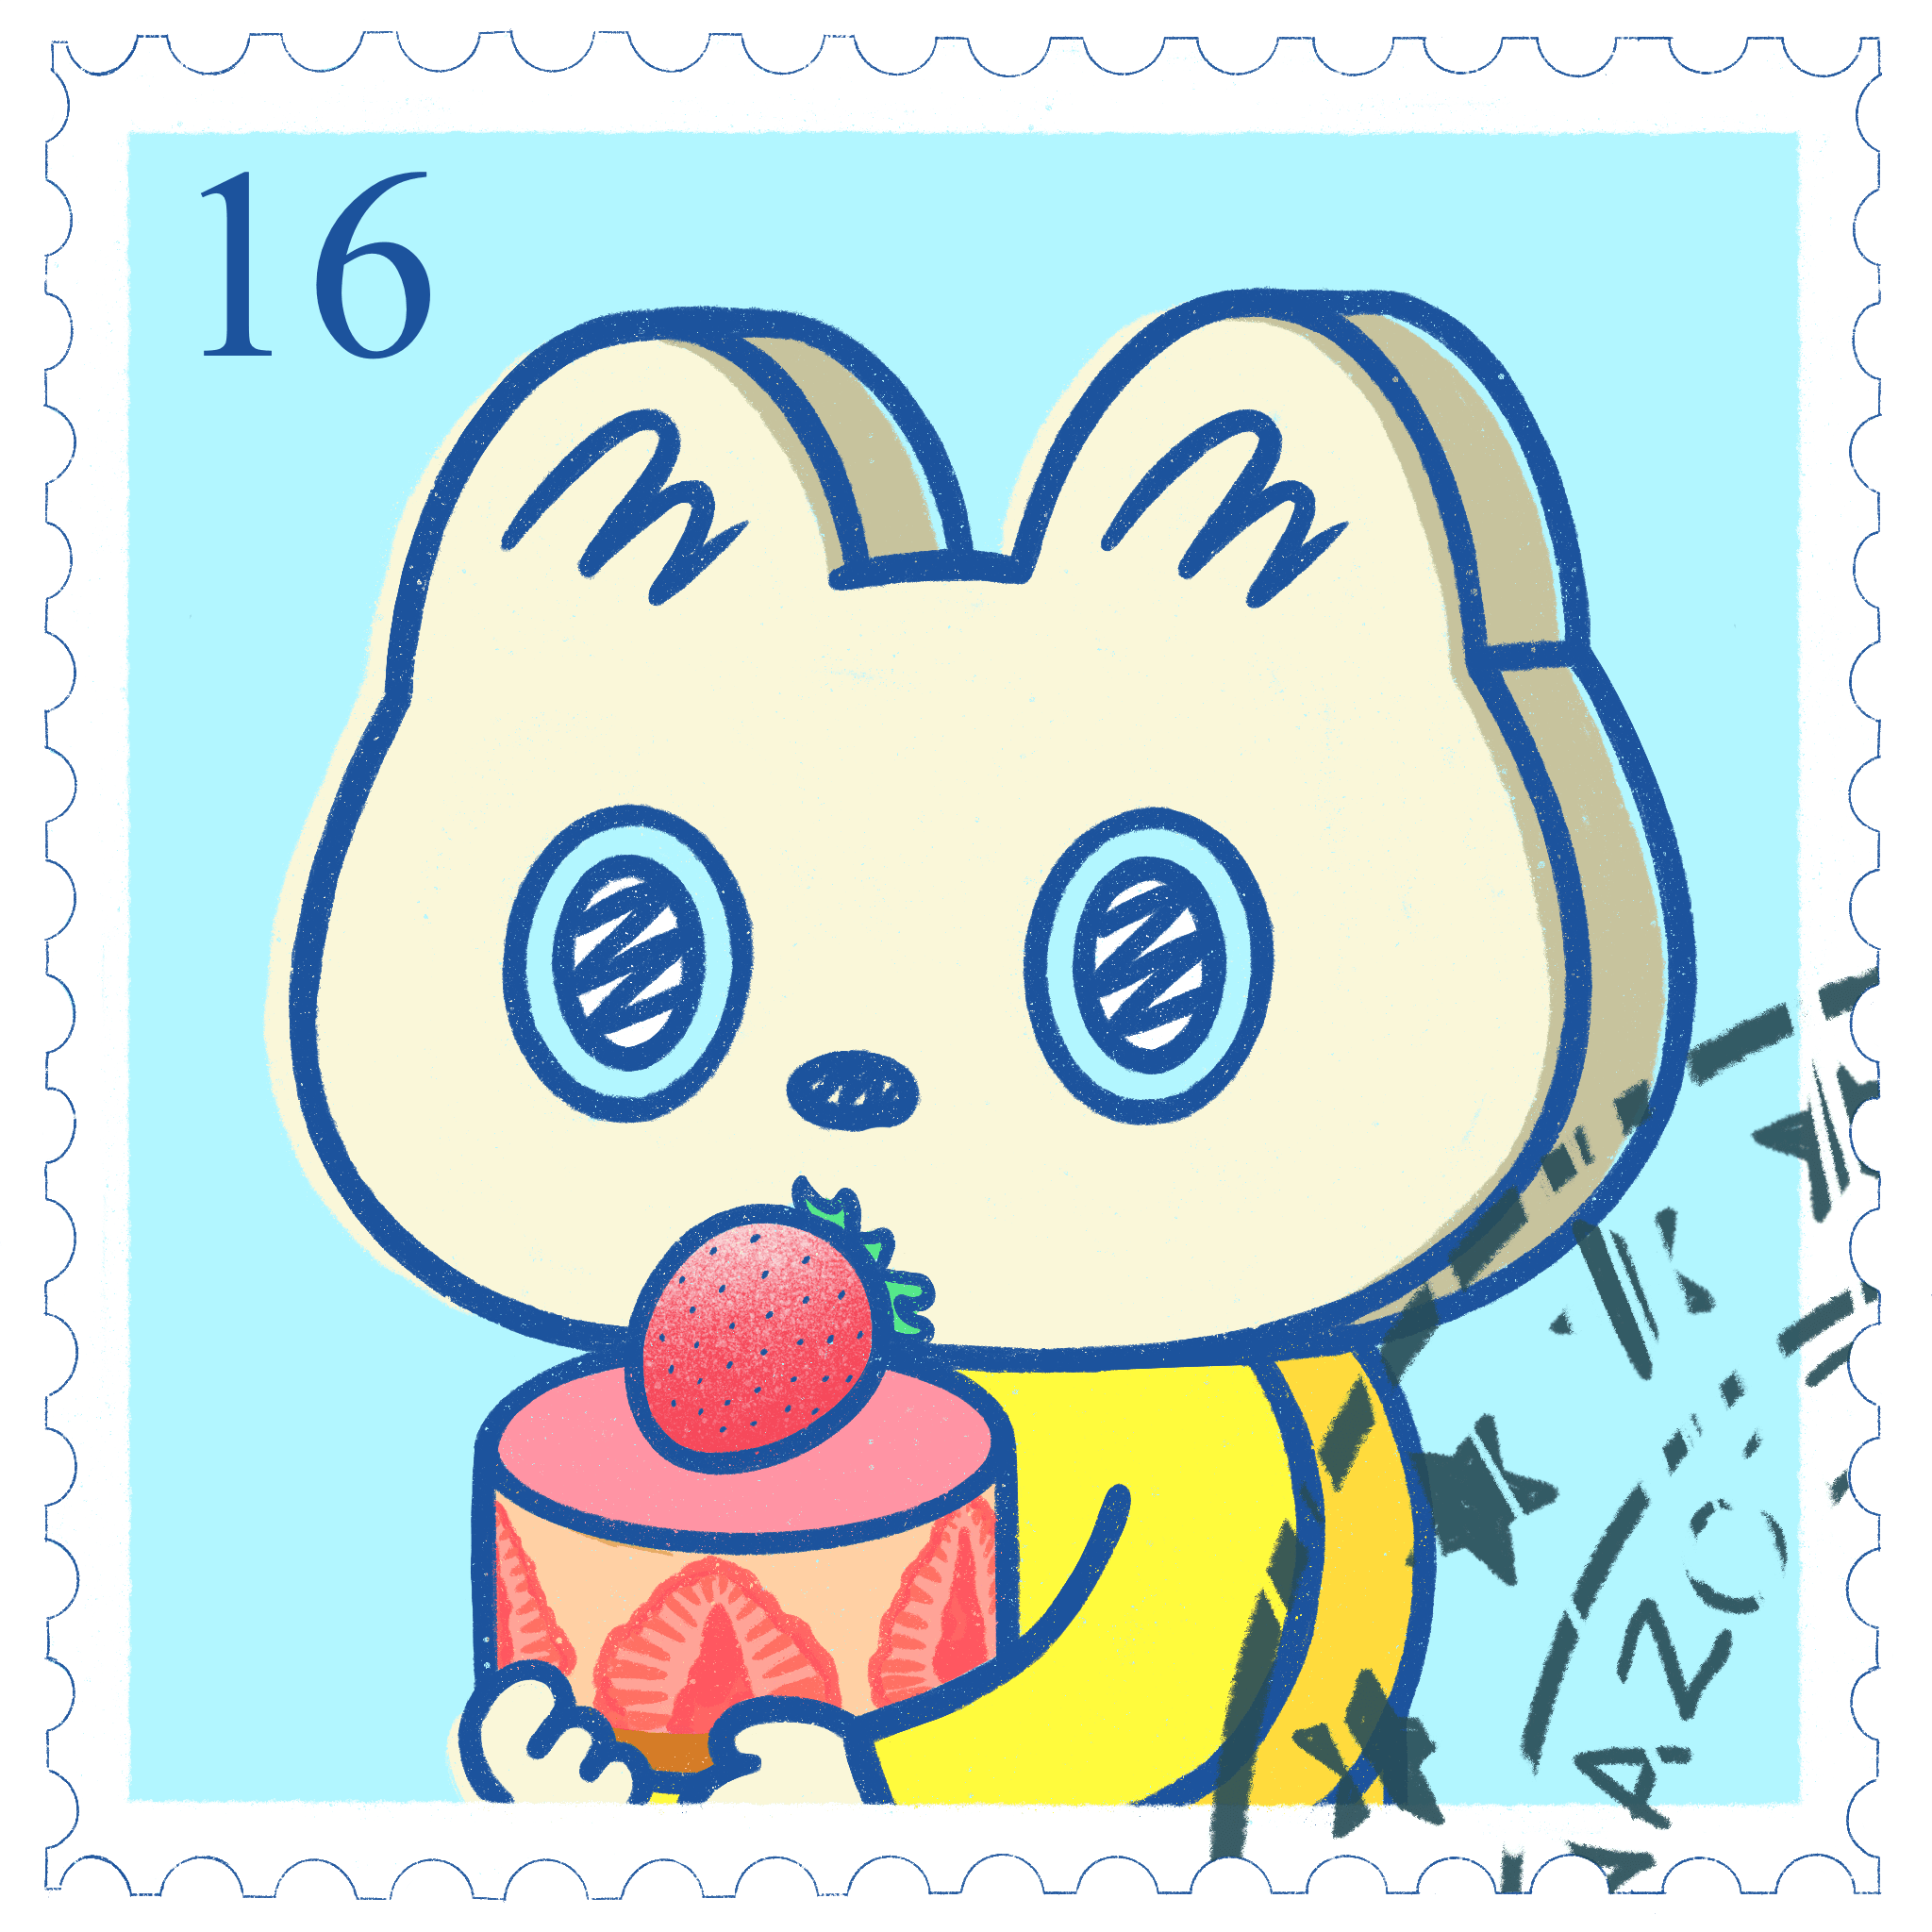 BA Stamp#16 (6666 Follower Commemorative Stamp)